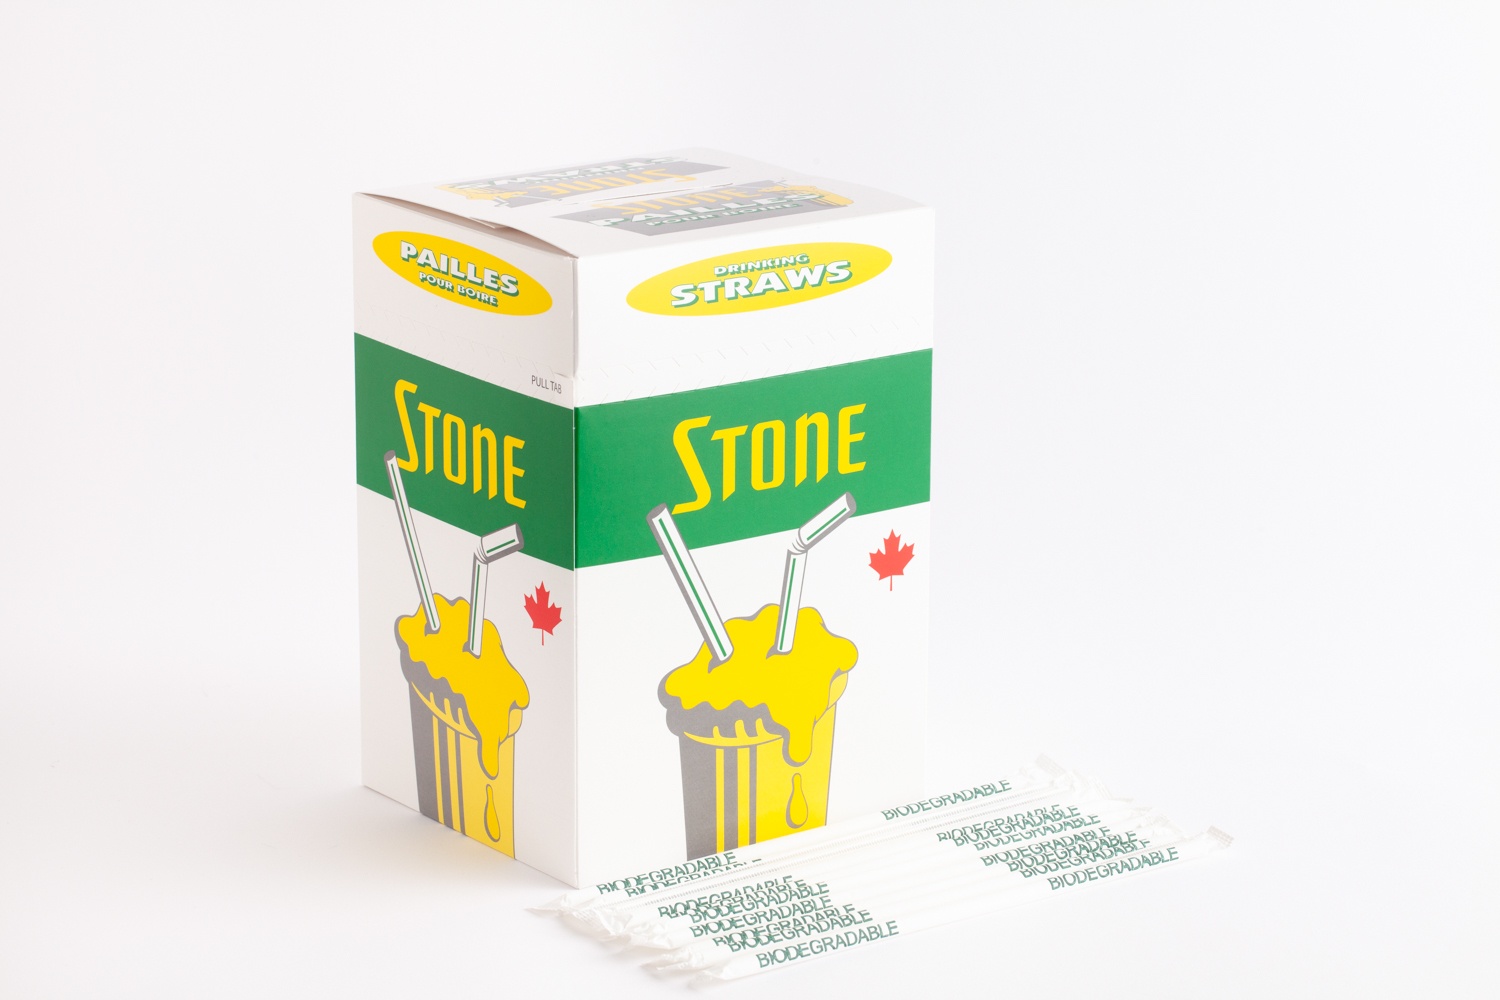 isolated product shot - stone straws box green